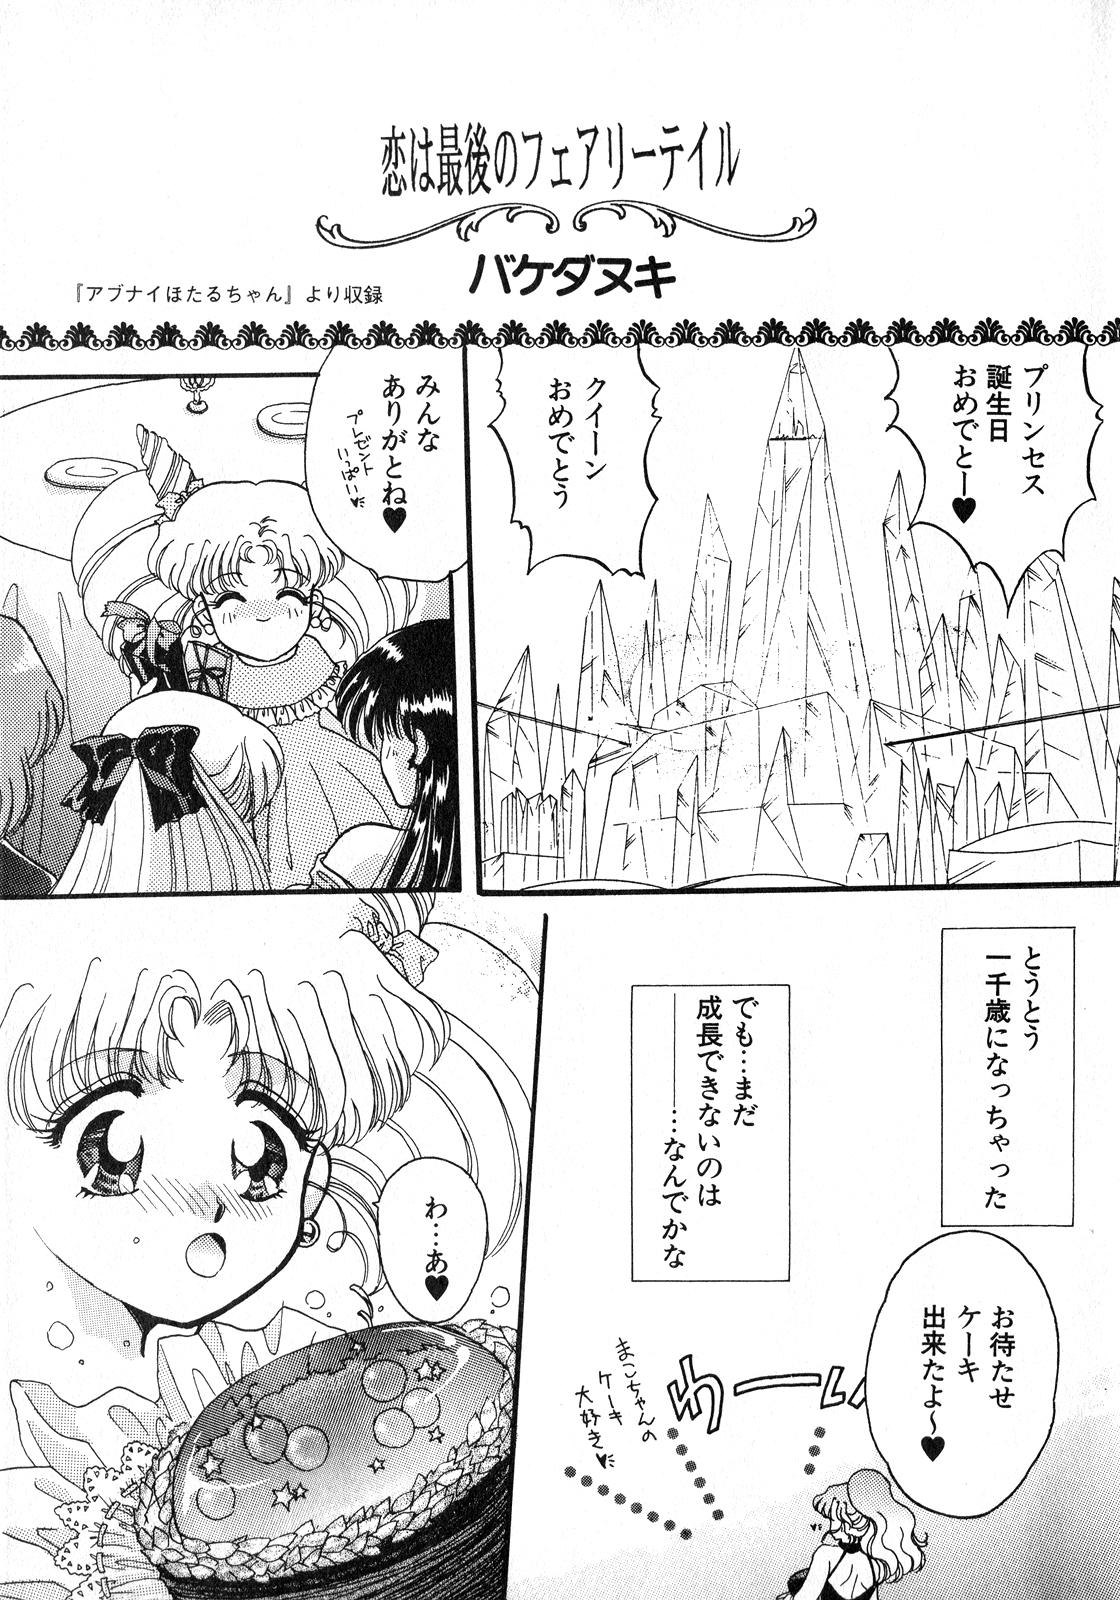 Bisexual Lunatic Party 8 - Sailor moon Coroa - Page 4